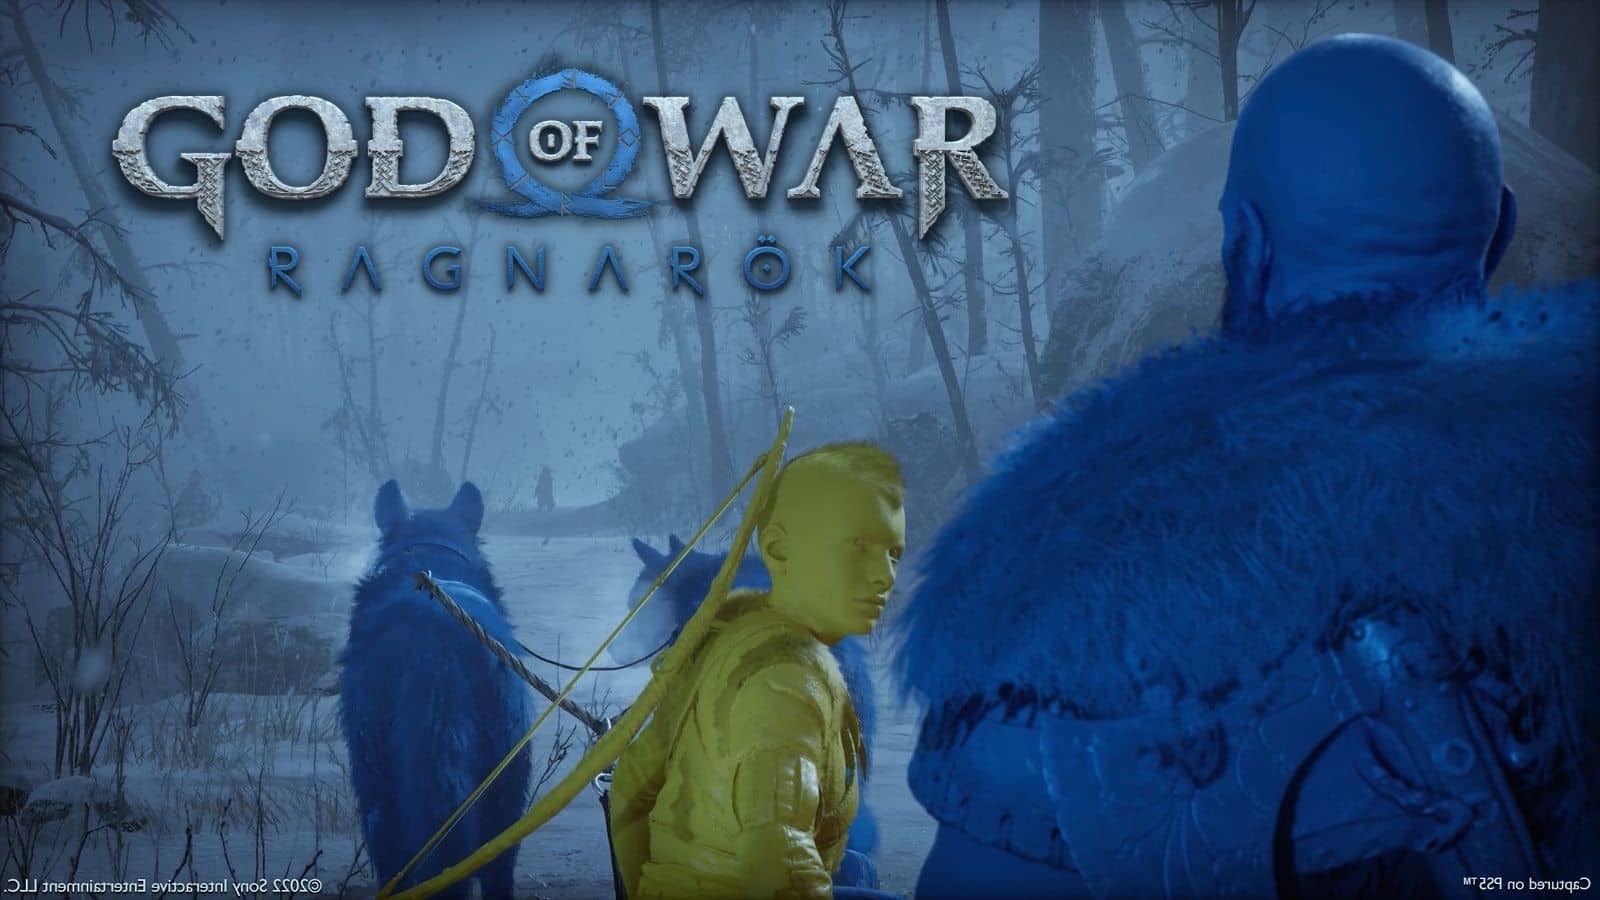 God of War Ragnarök Animated Family Portraits highlight 5 key